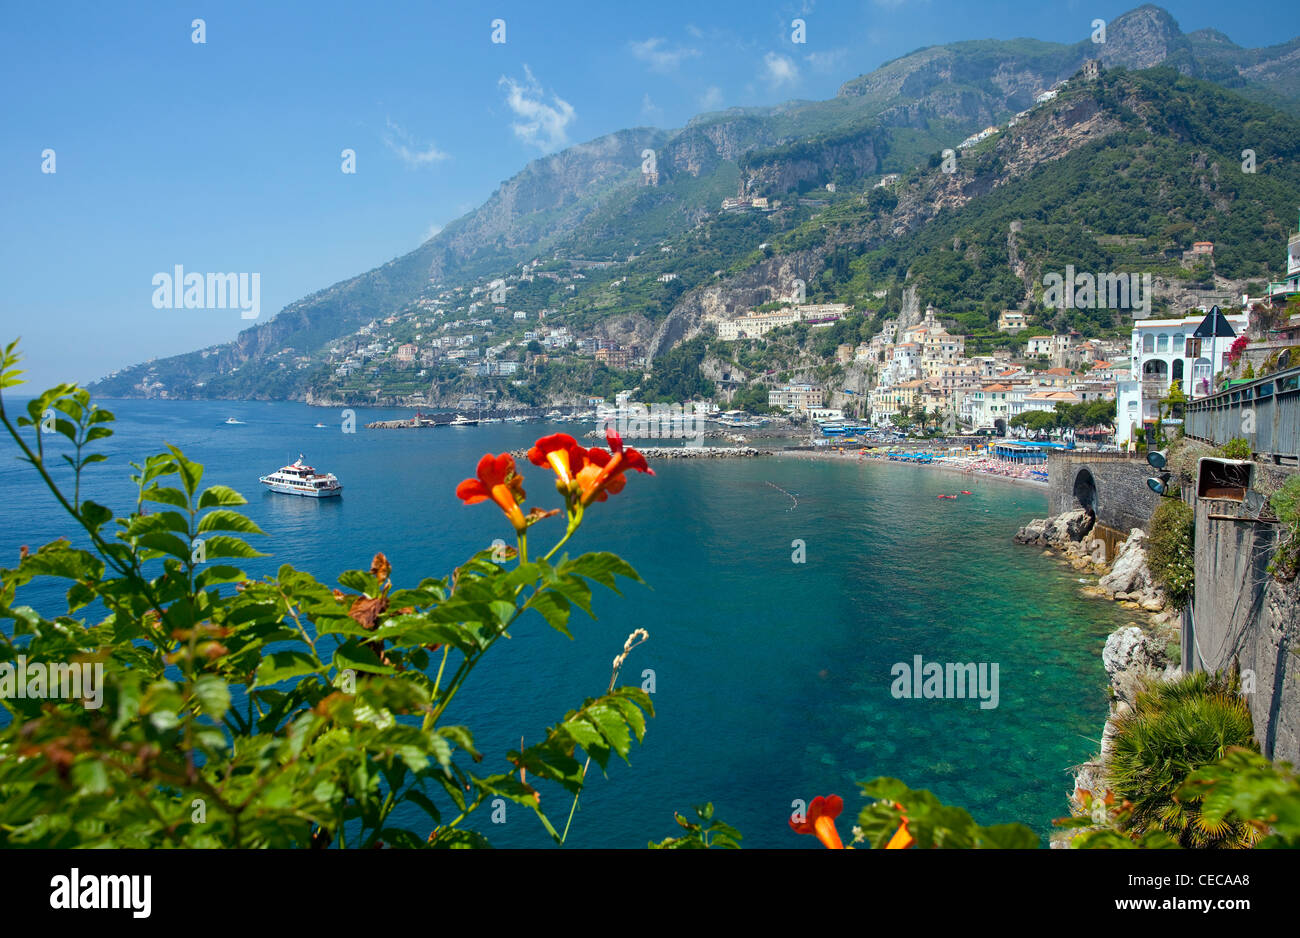 The village Amalfi at the Amalfi coast, Unesco World Heritage site, Campania, Italy, Mediterranean sea, Europe Stock Photo